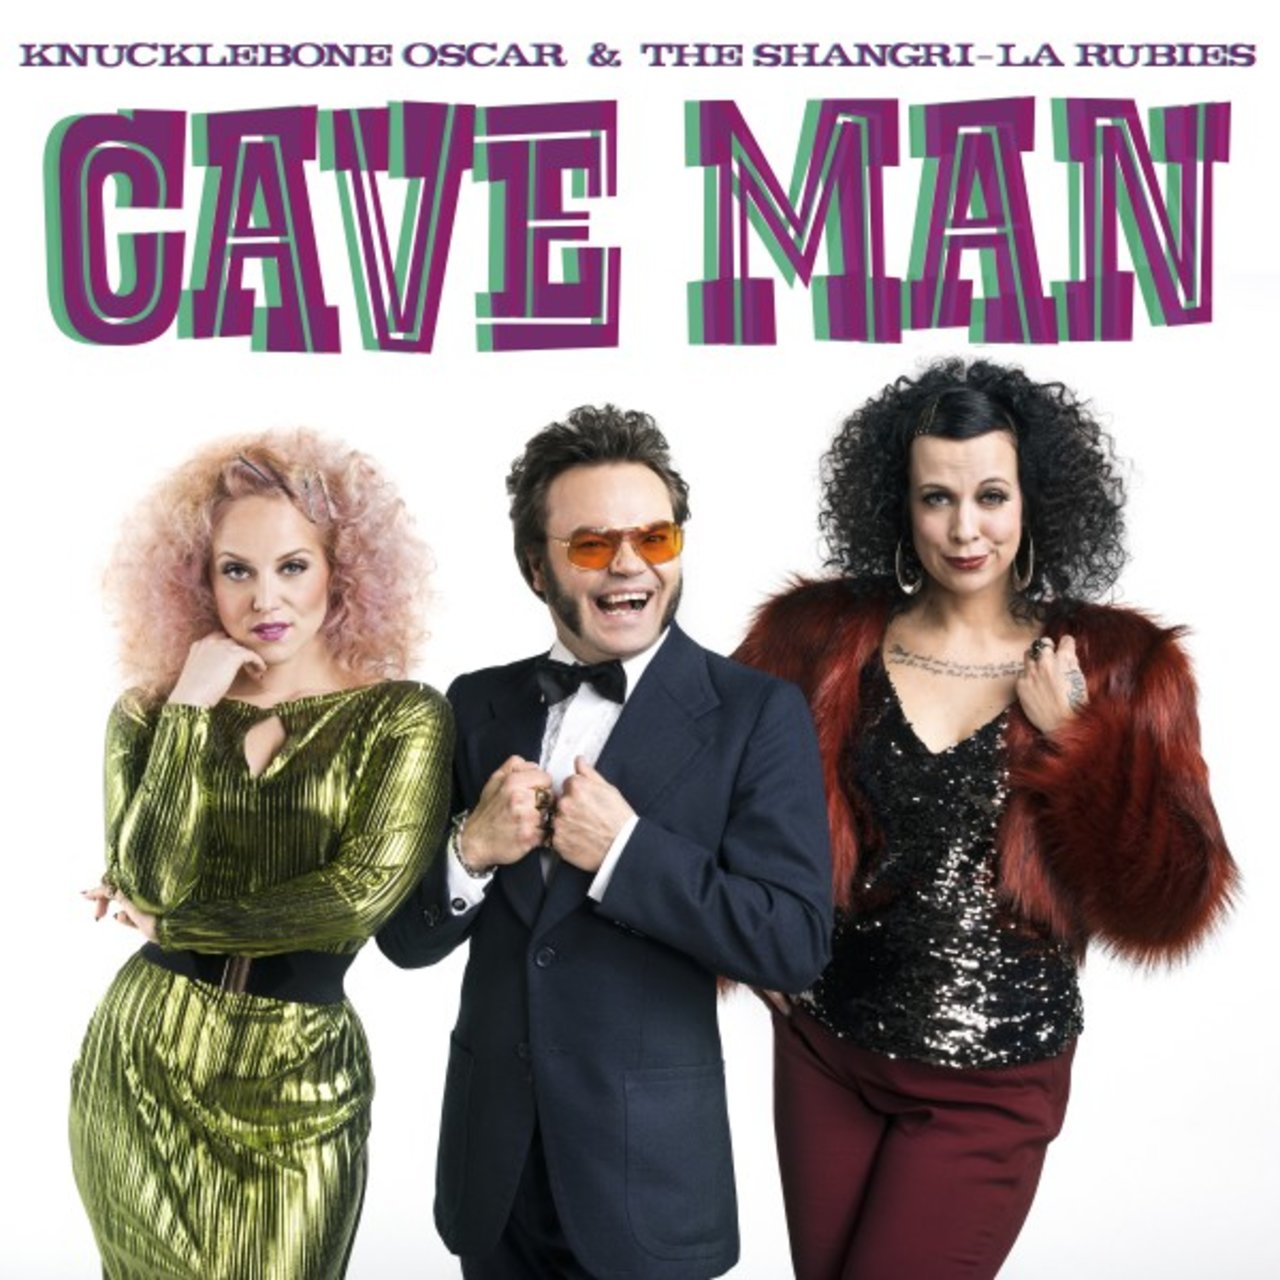 Knucklebone Oscar & The Shangri-La Rubies — Caveman cover artwork